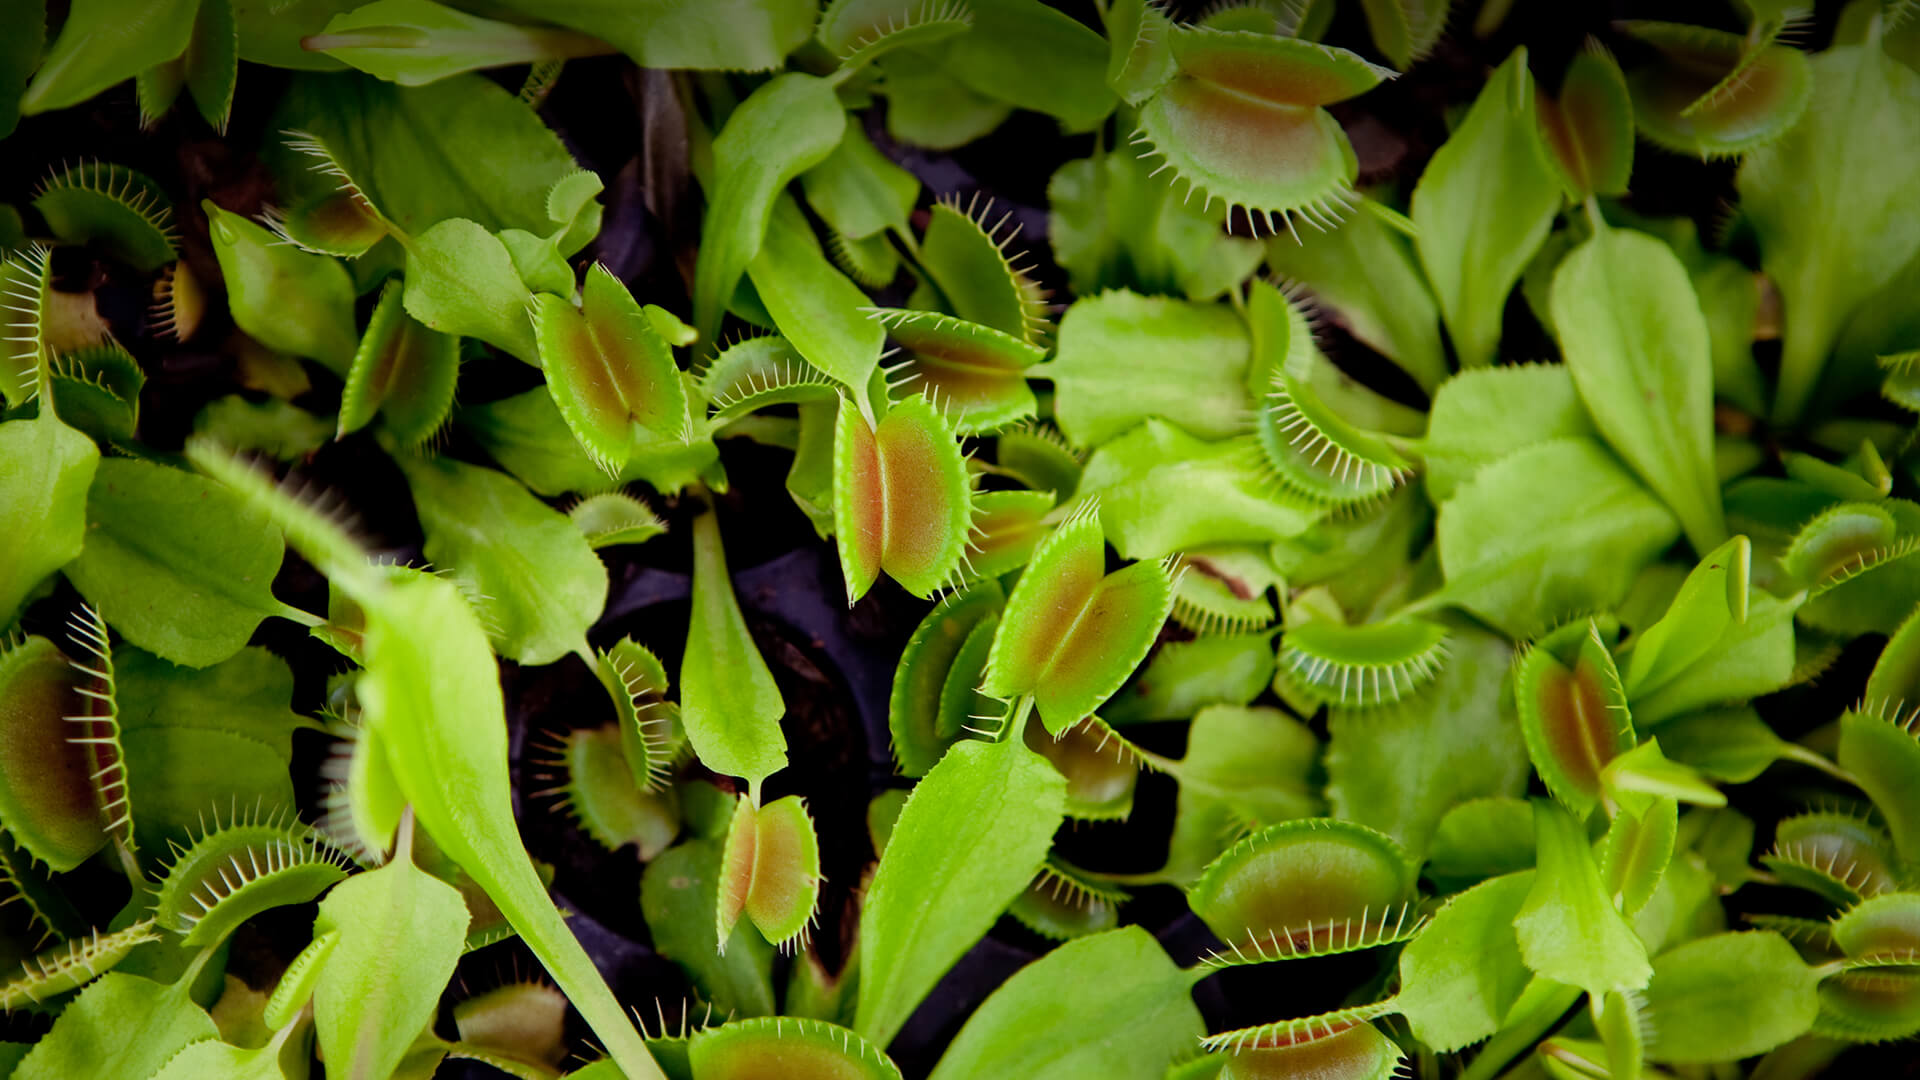 A large covering of venus flytraps